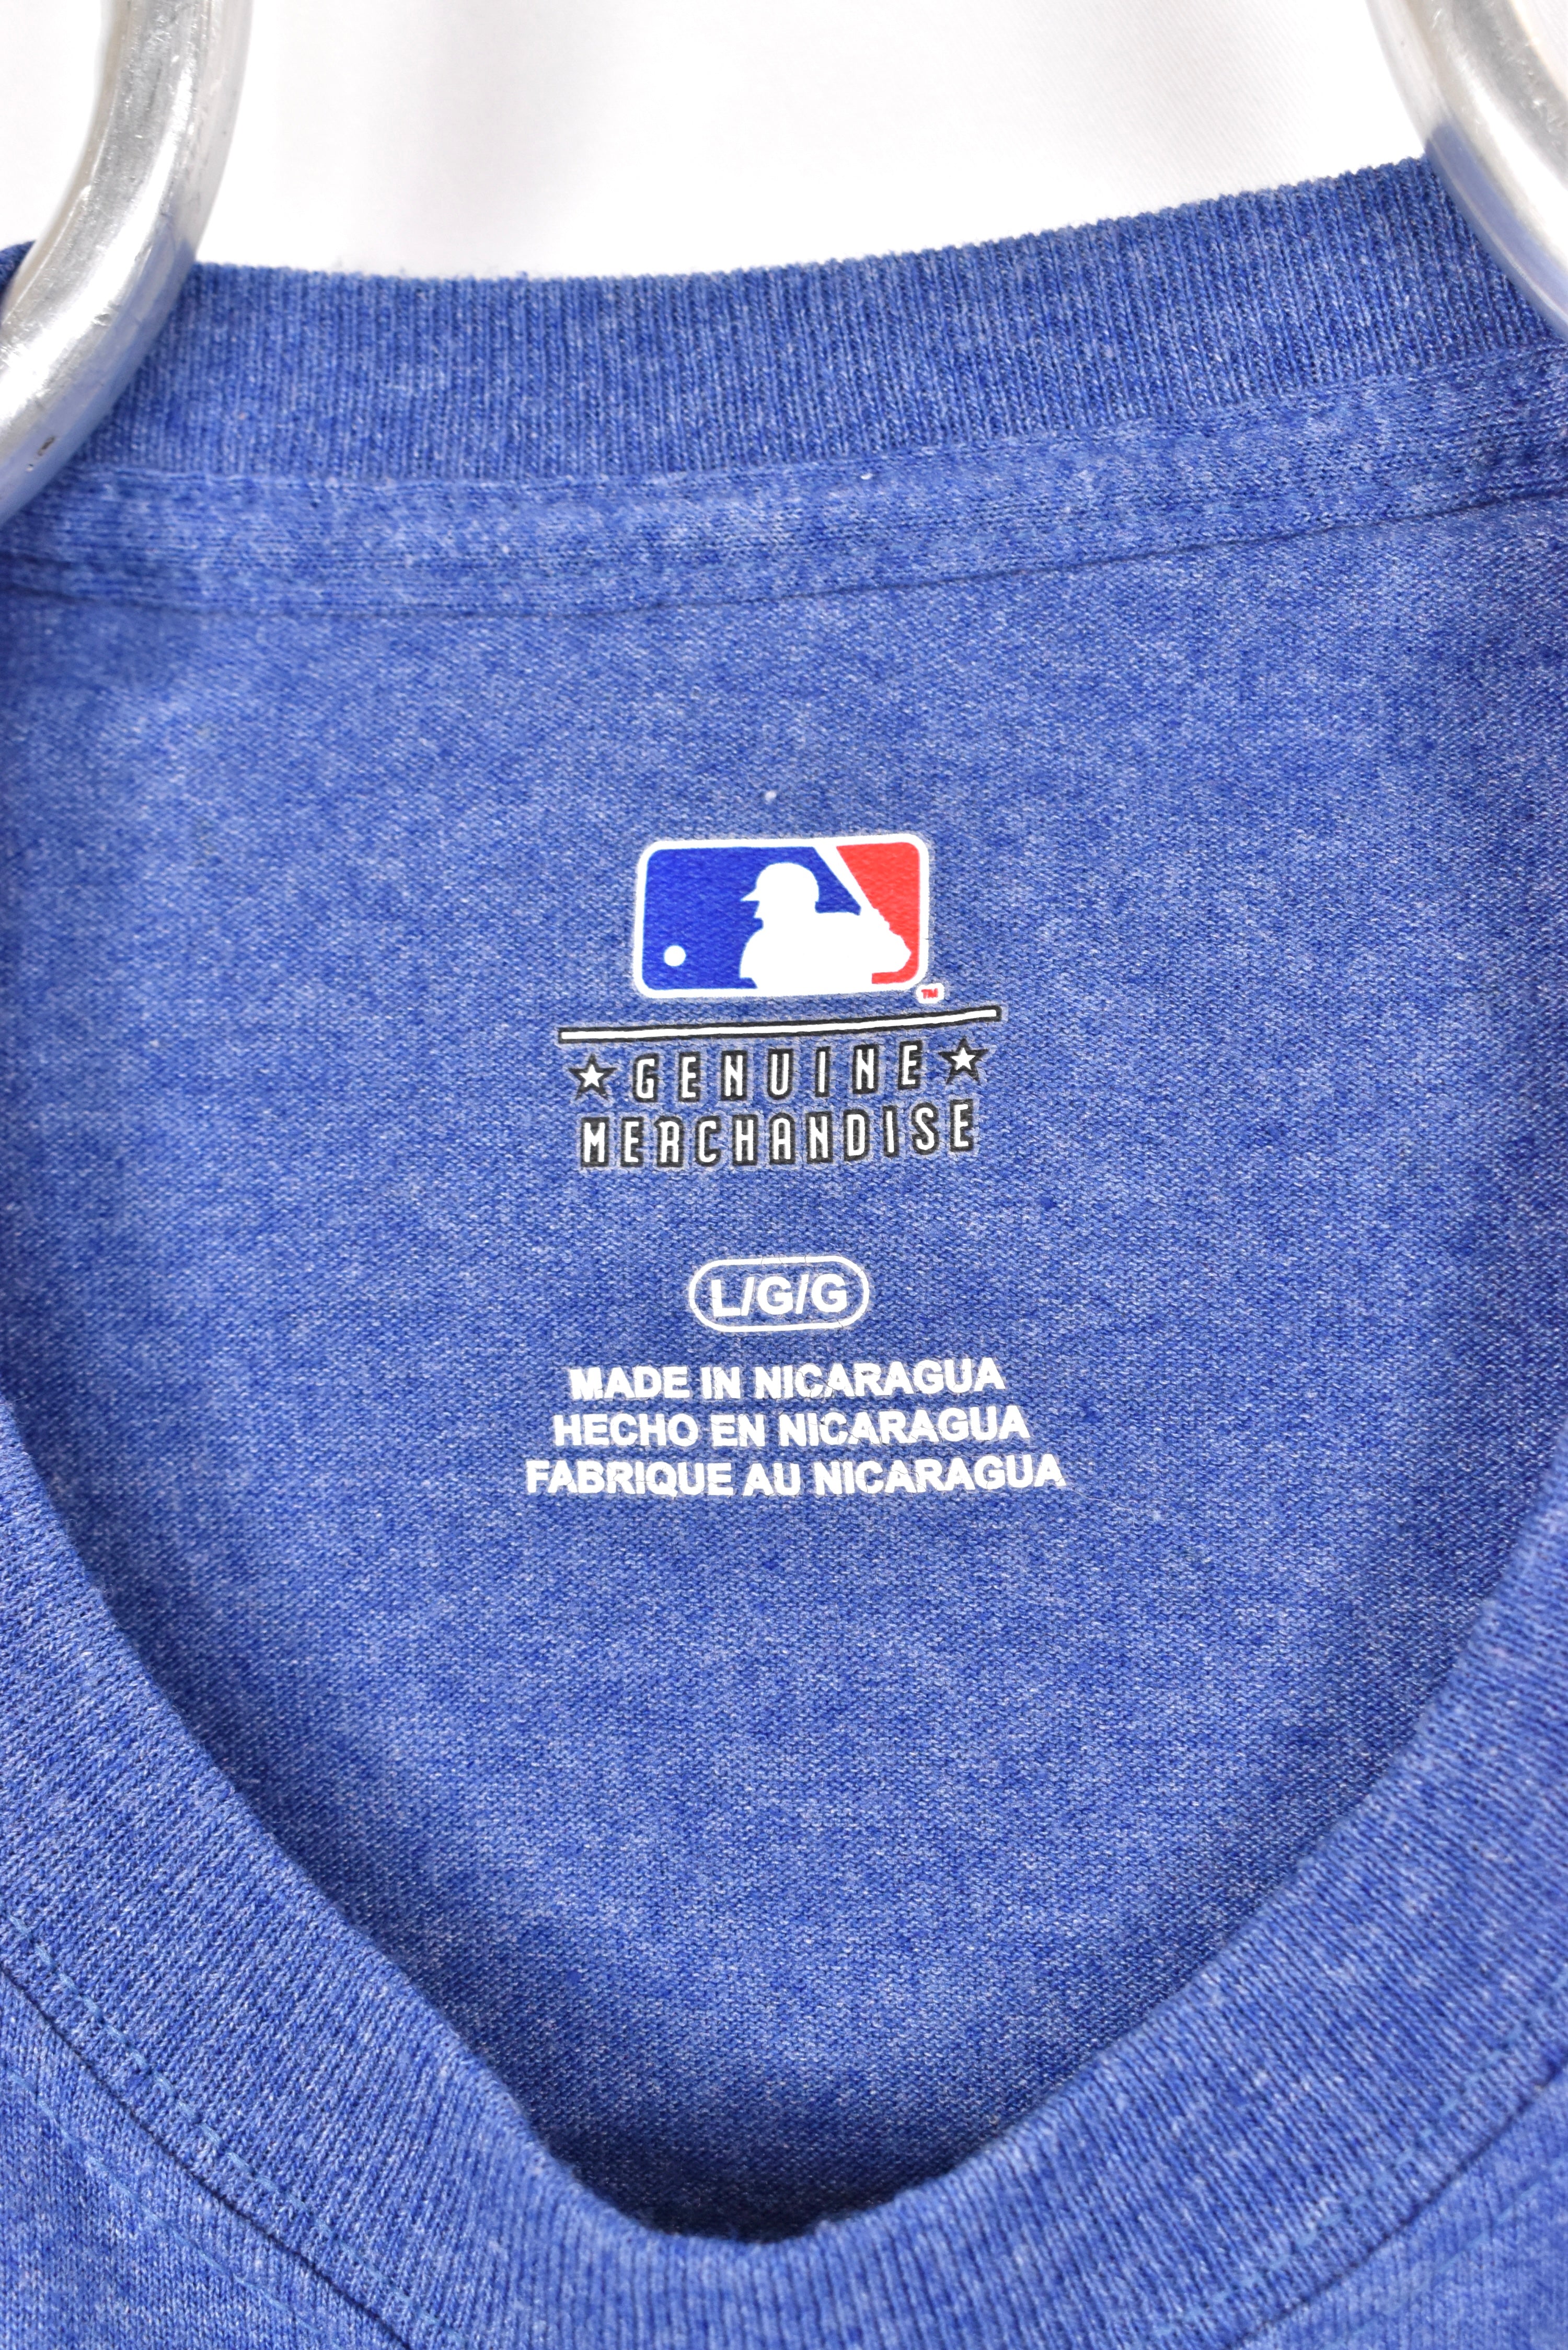 Modern Milwaukee Brewers shirt, MLB blue graphic tee - AU Large PRO SPORT